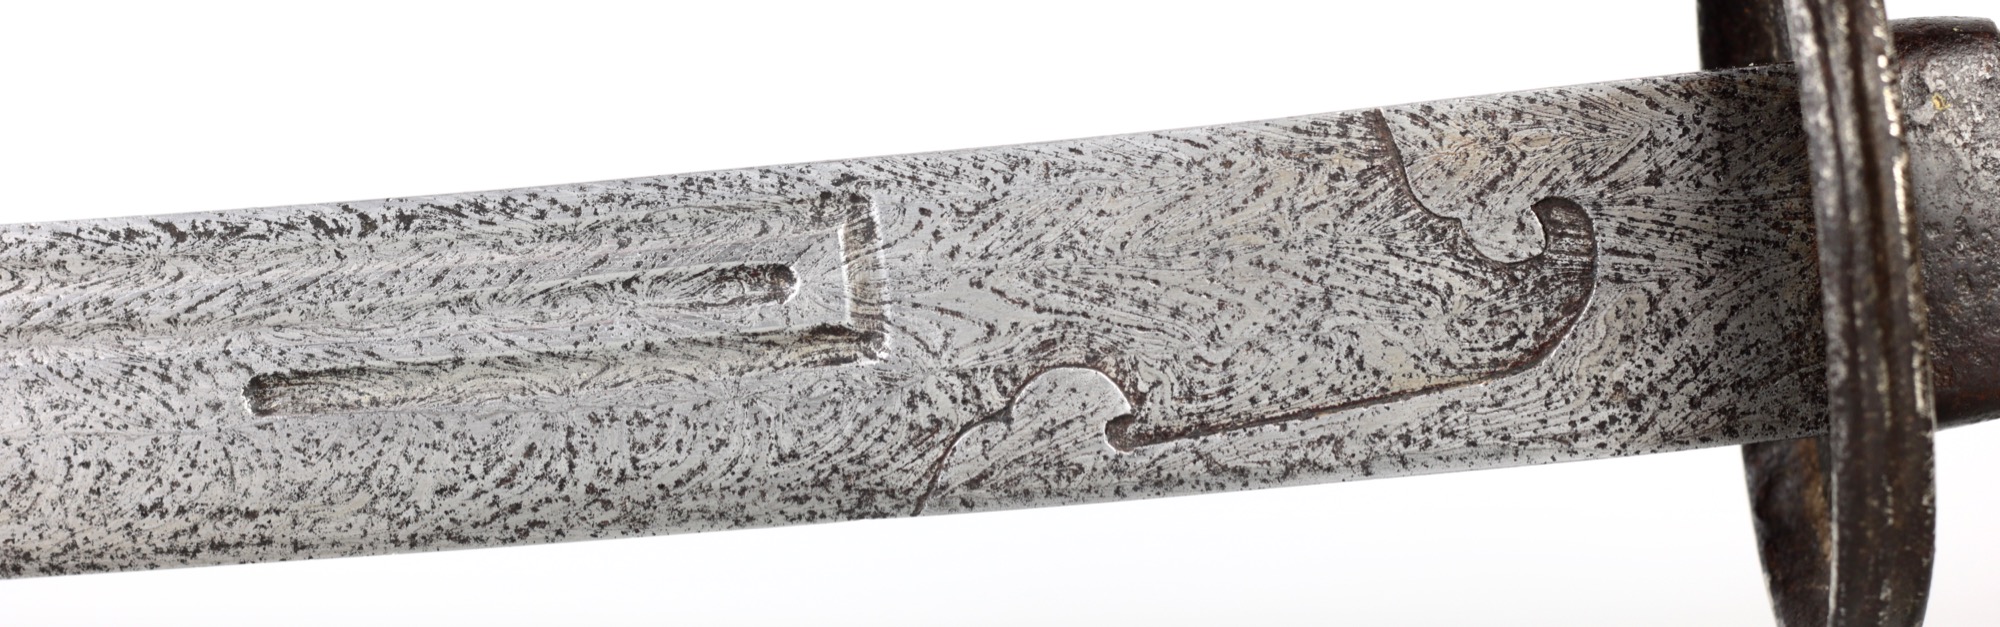 17th century huawengang saber blade close-up